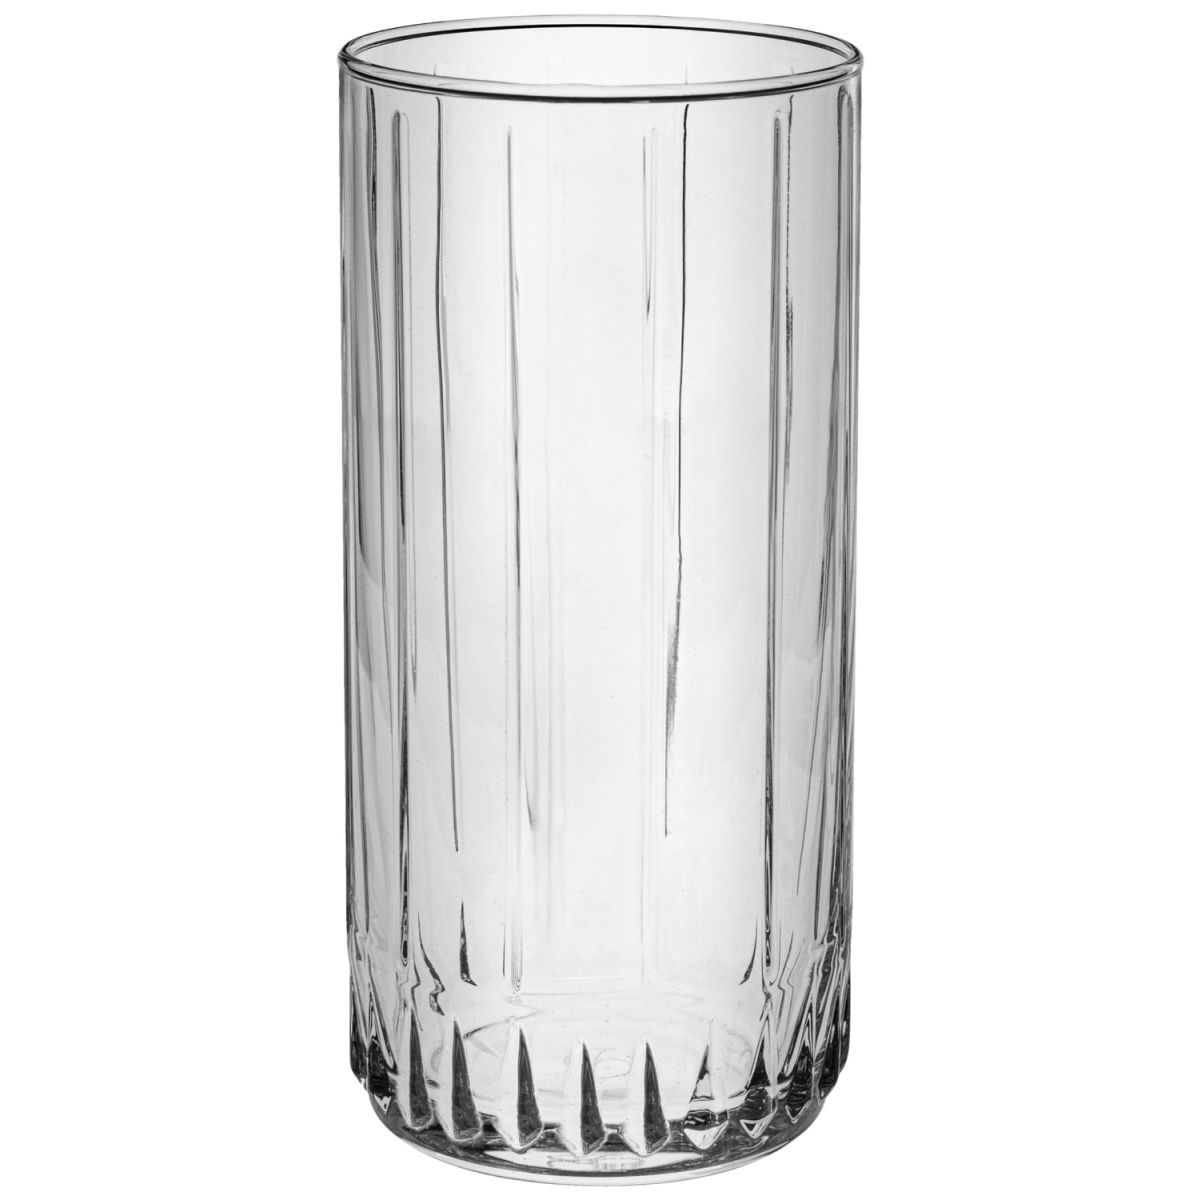 Pasabahçe Longdrinkglas Leia; 310ml, 5.5x13.5 cm (ØxH); transparant; 6 stuk / verpakking